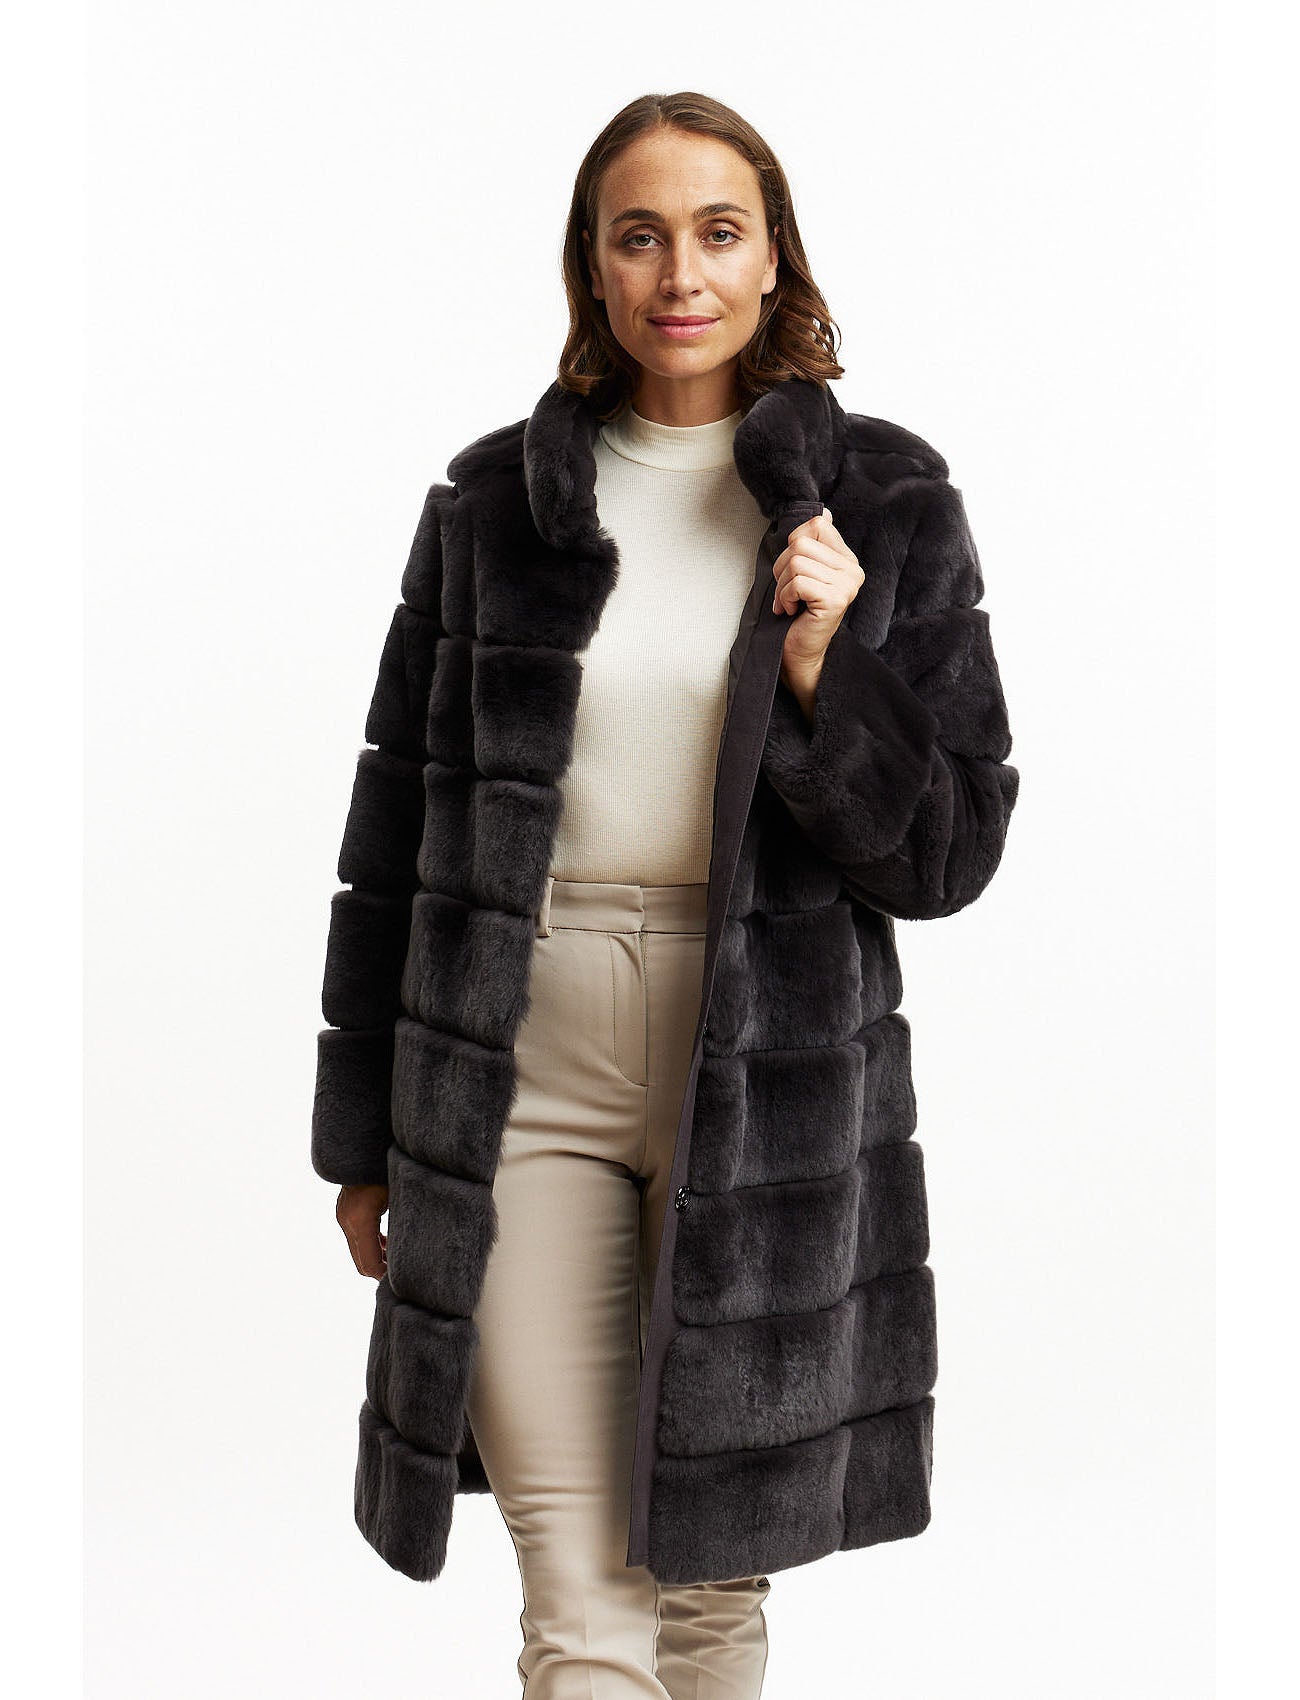 Fur jacket - basalt grey